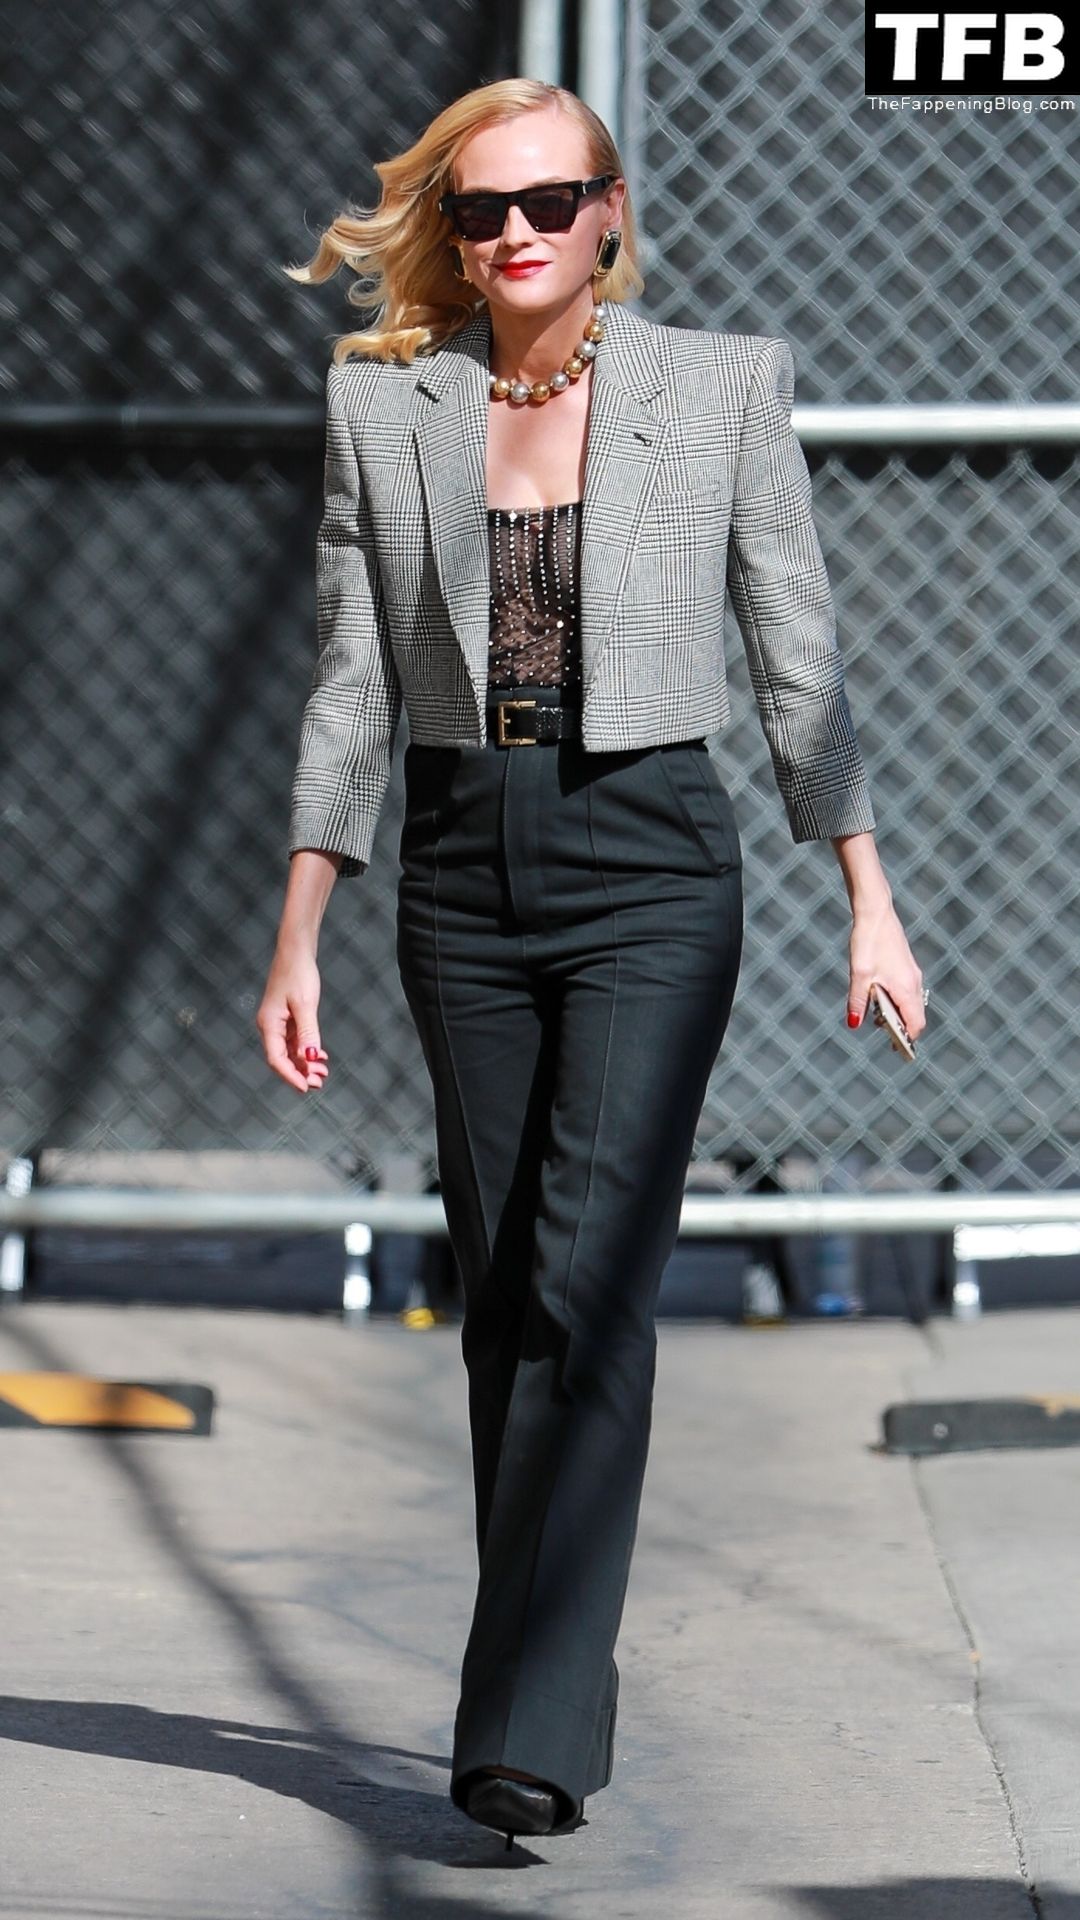 Diane-Kruger-Sexy-The-Fappening-Blog-4.jpg